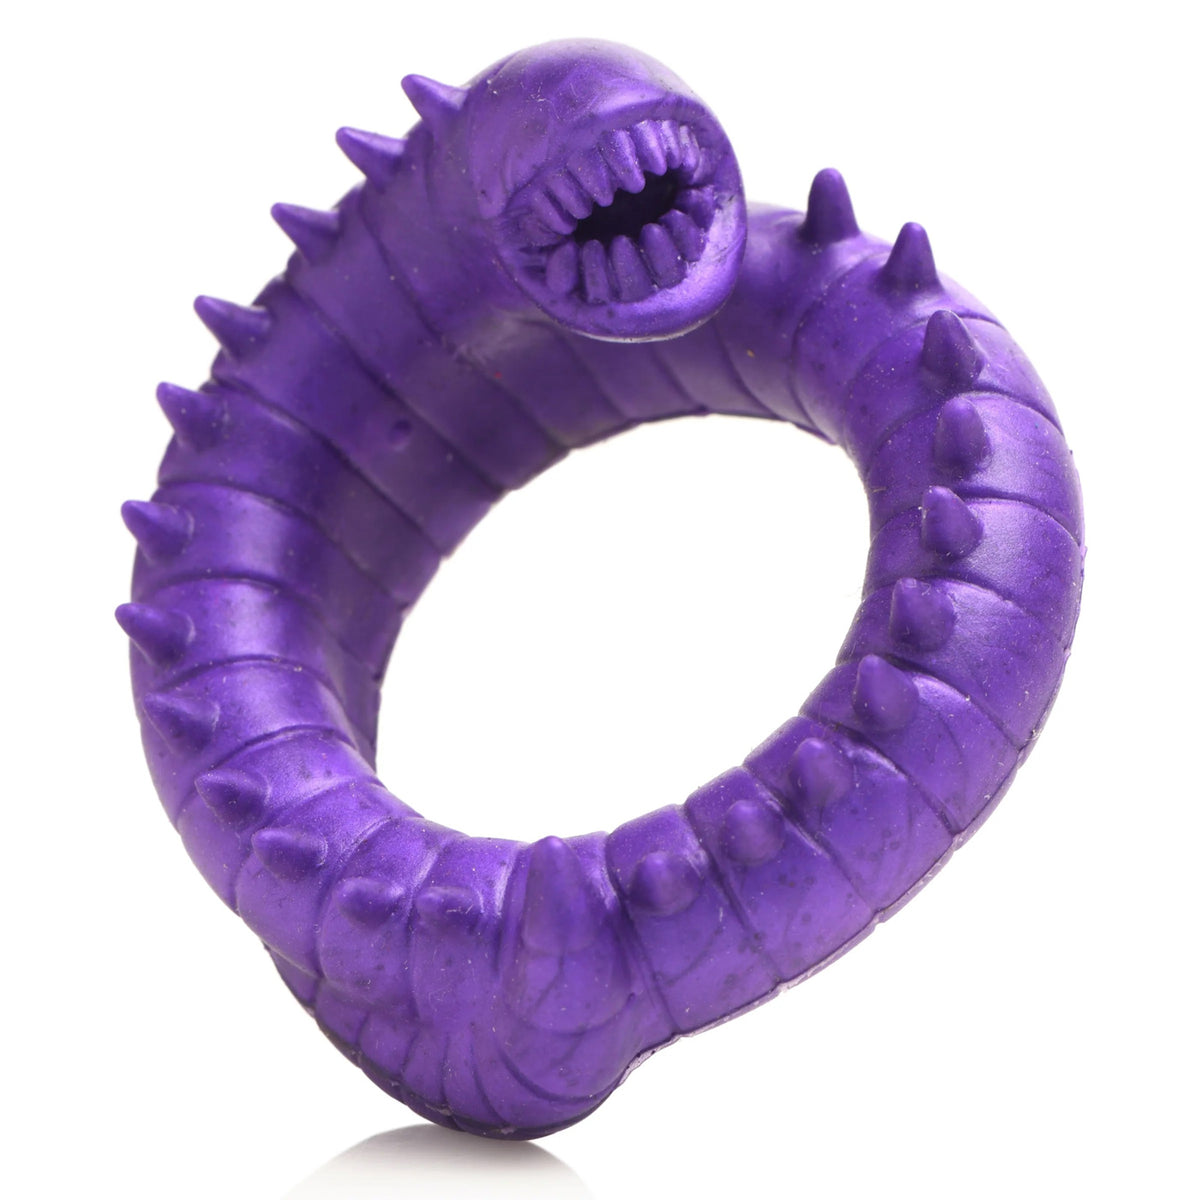 Anillo de silicona para el pene Slitherine - Púrpura